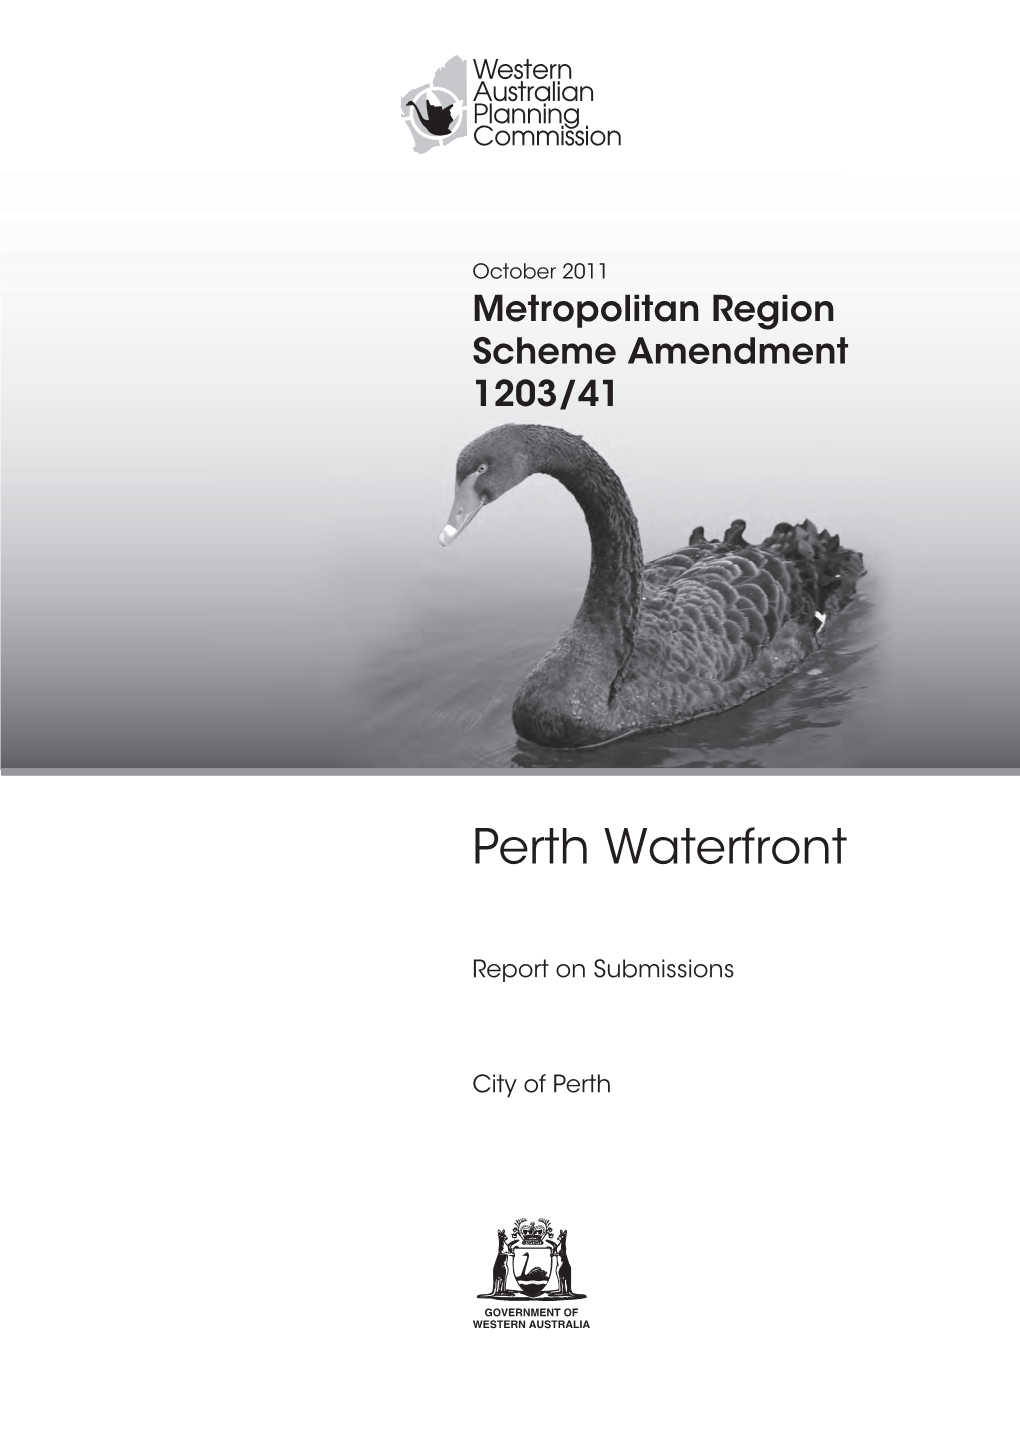 Perth Waterfront